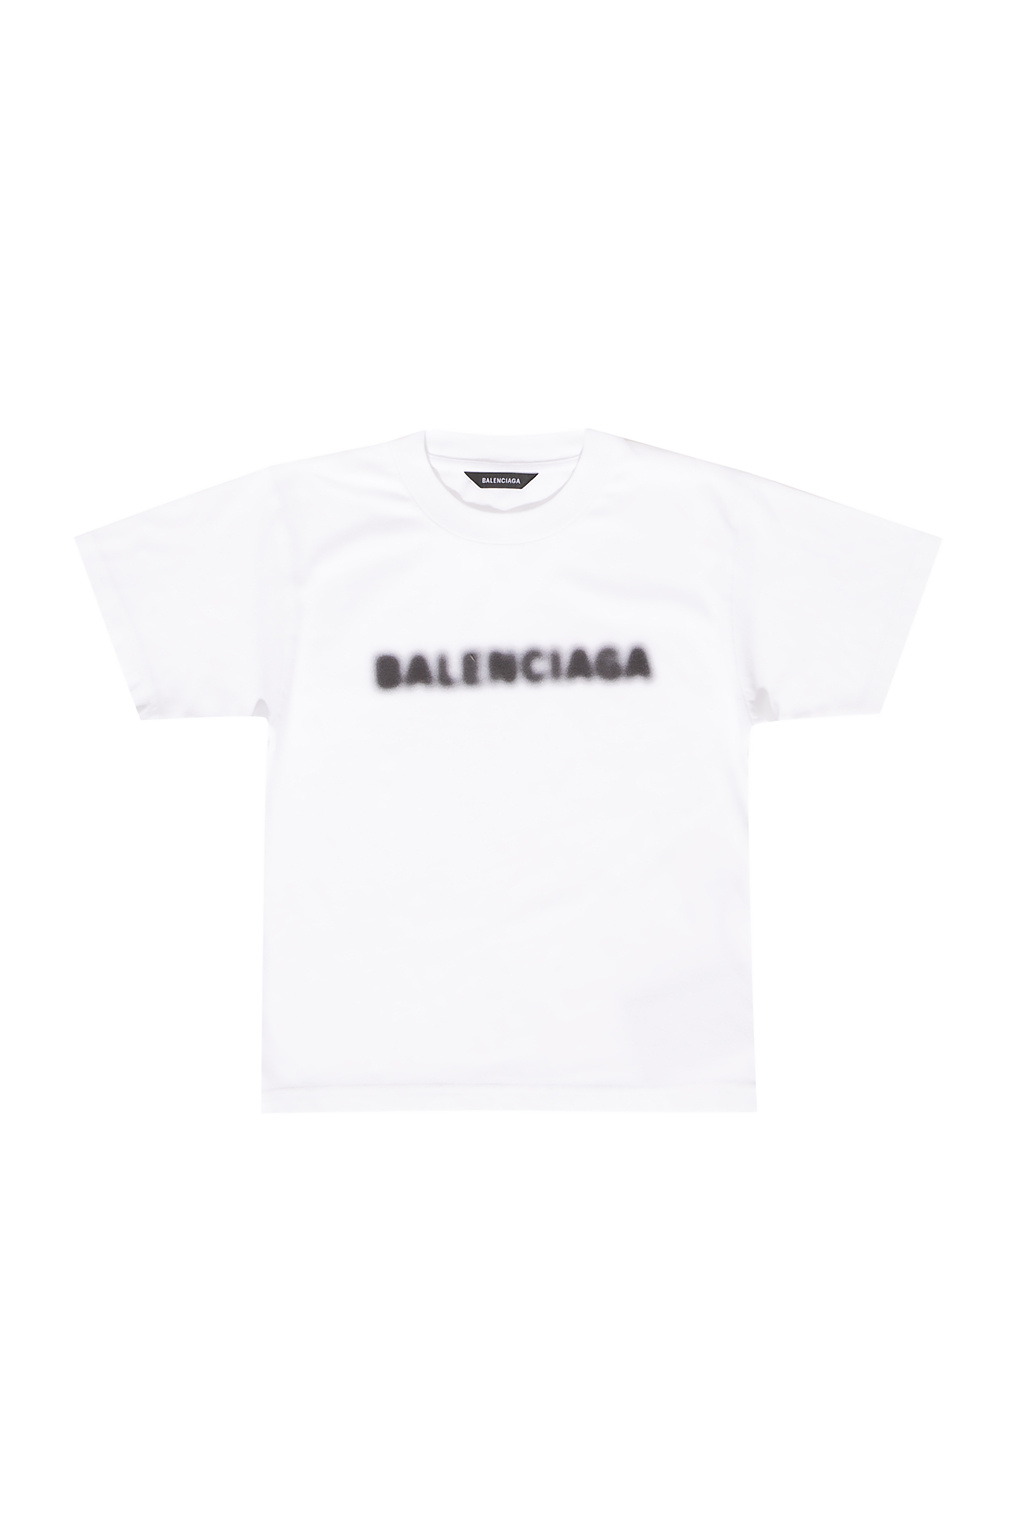 in shirt - Logo T Kids - StclaircomoShops - printed zwart - hoodie Up White Kuwait Balenciaga RIPNDIP Square